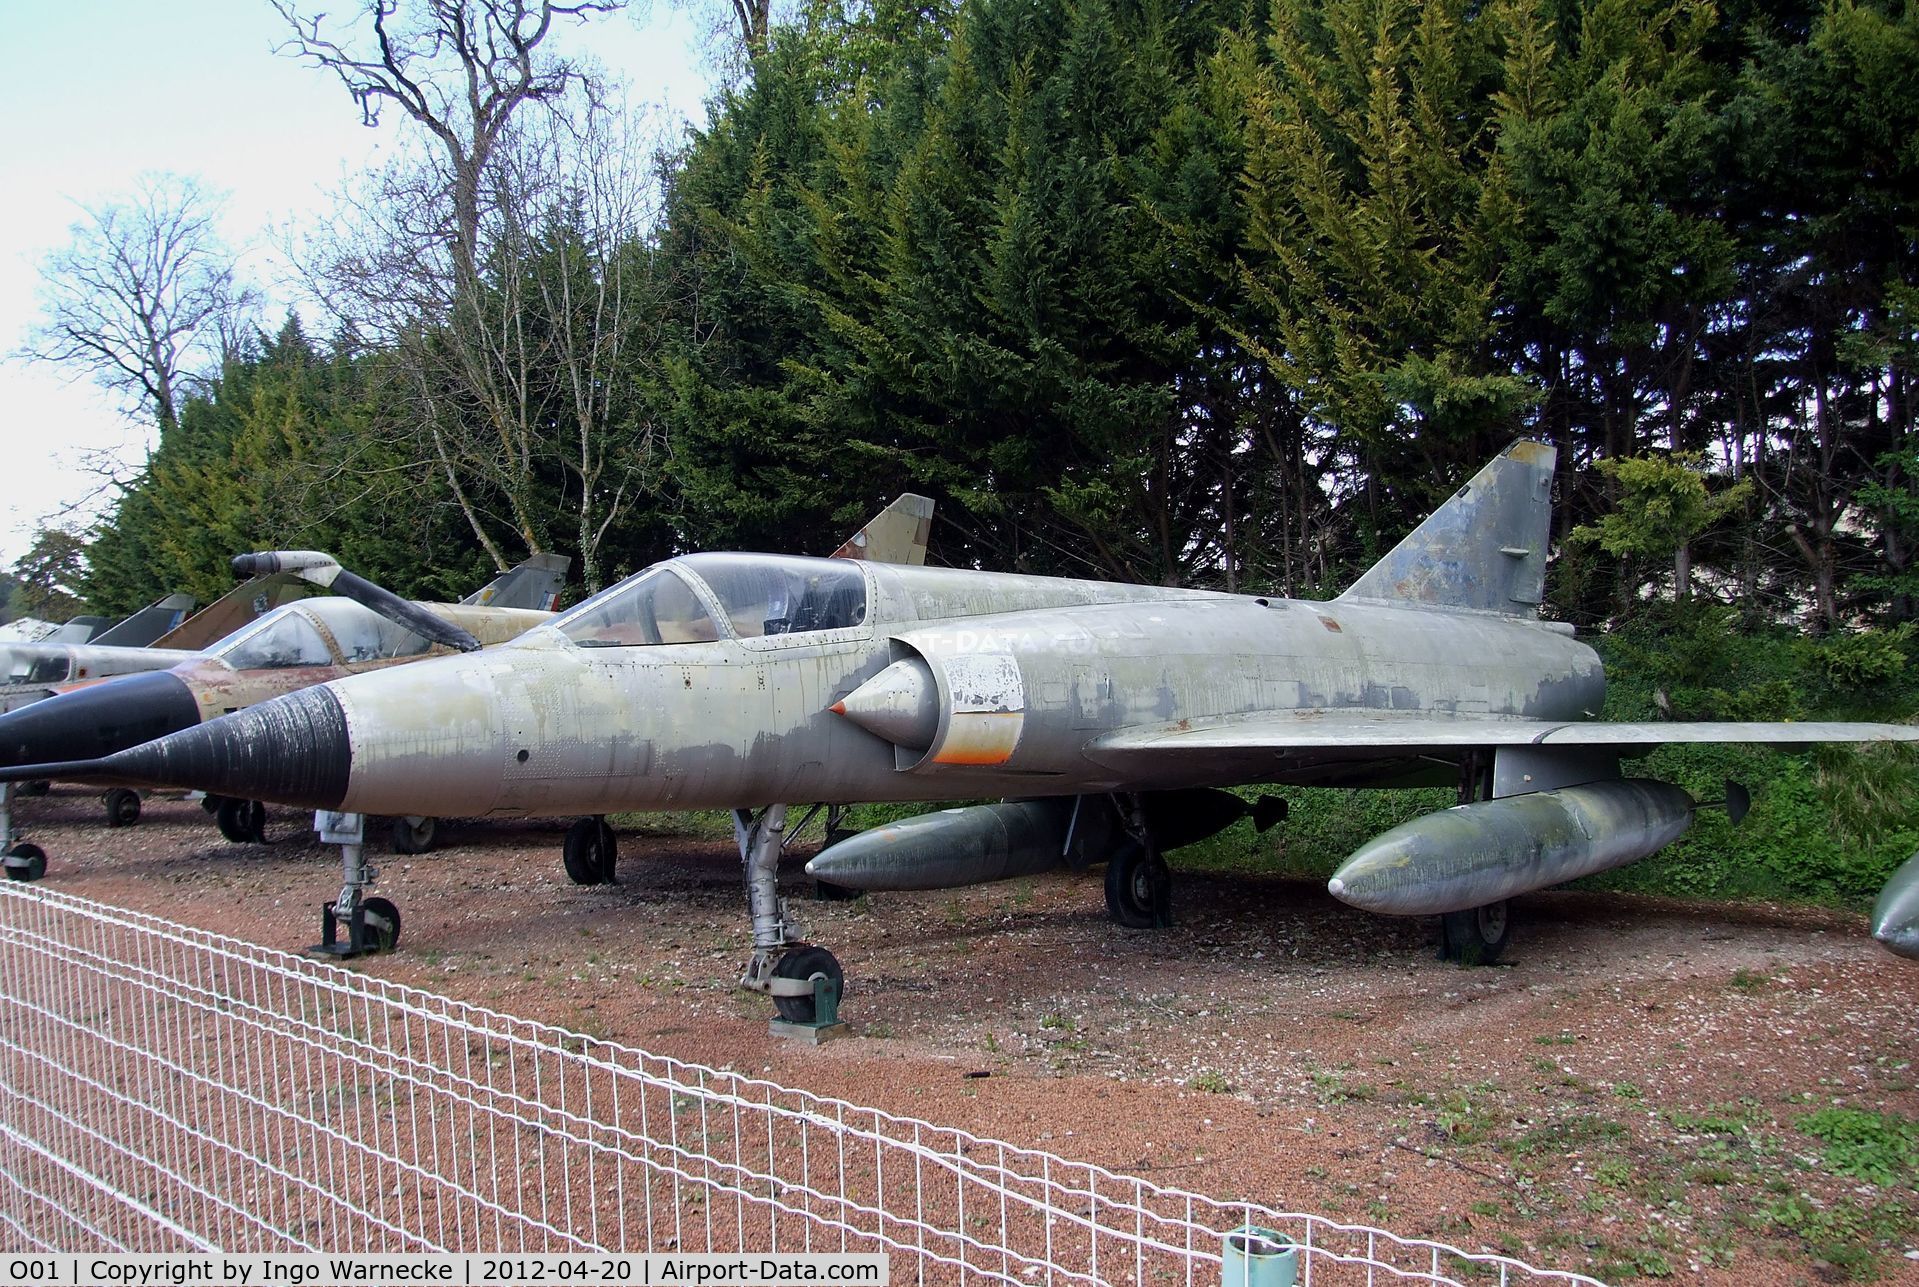 O01, Dassault Mirage IIIO C/N 001, Dassault Mirage III O at the Musee de l'Aviation du Chateau, Savigny-les-Beaune